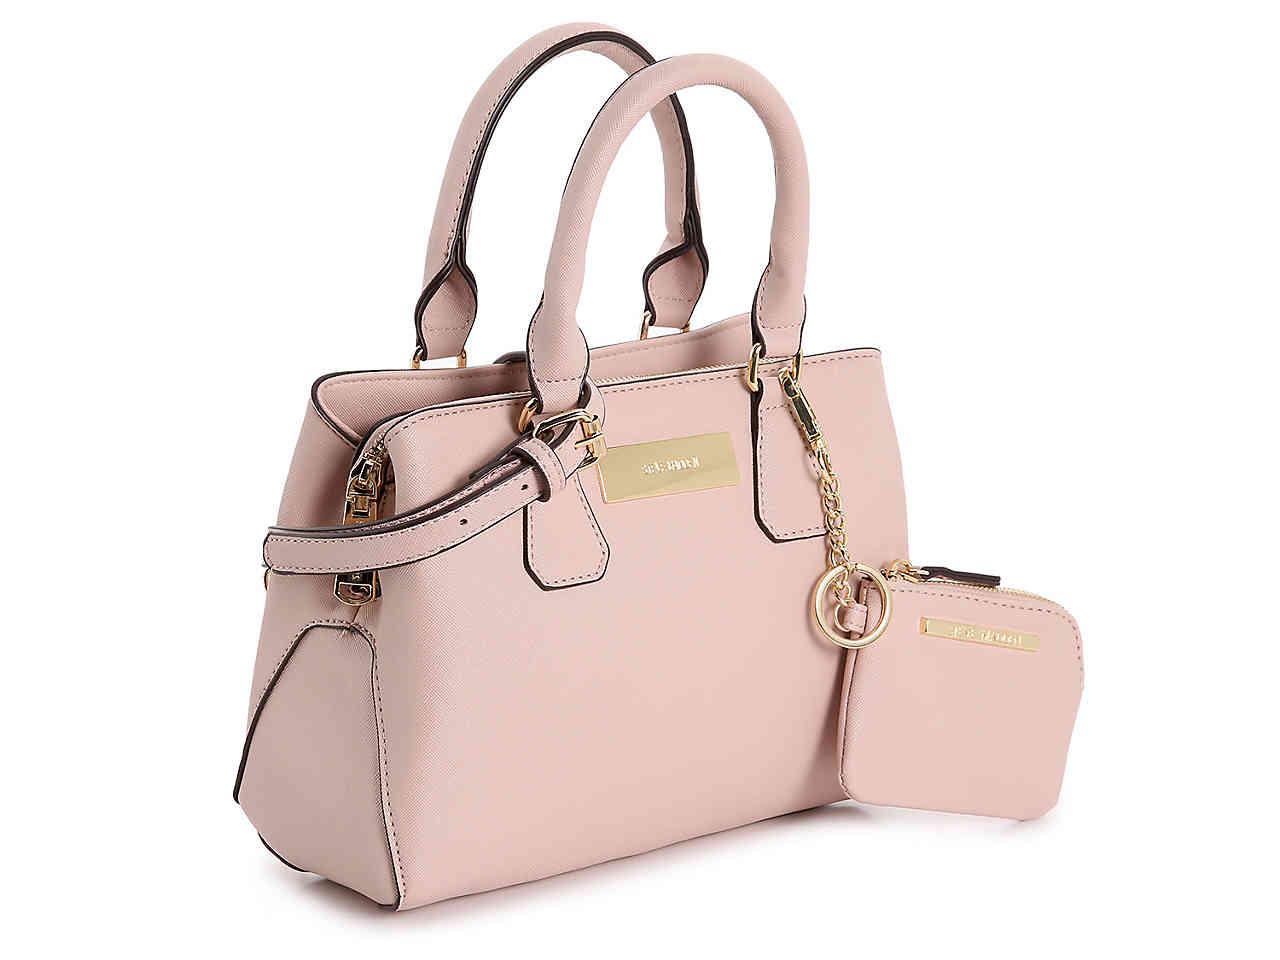 Steve Madden Pink Macy's Handbags